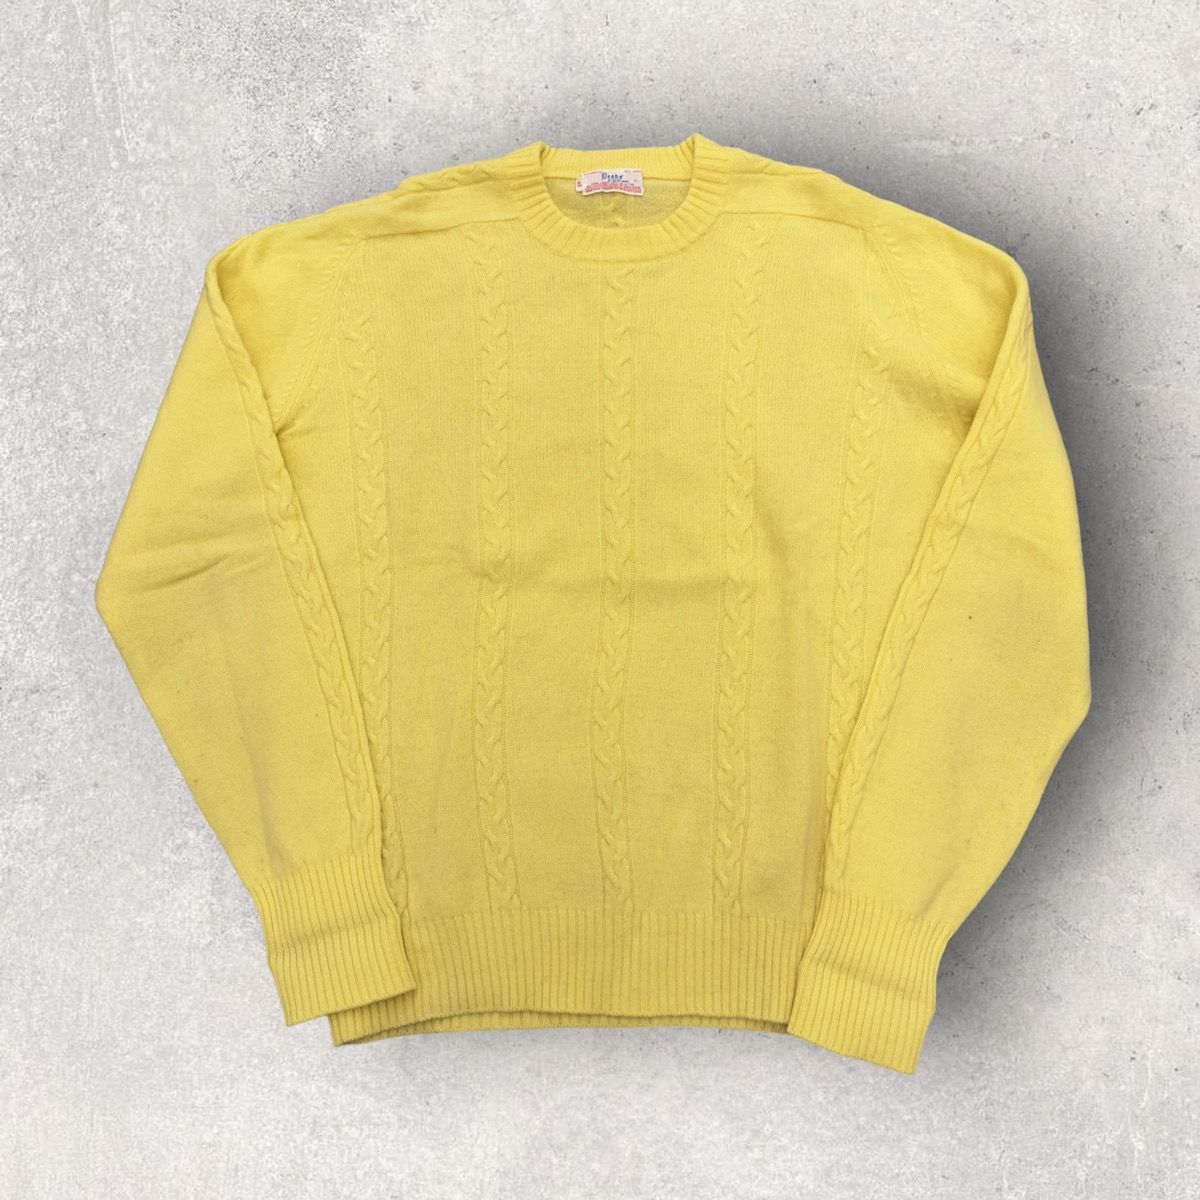 Vintage Vintage Deans of Scotland sweater | Grailed